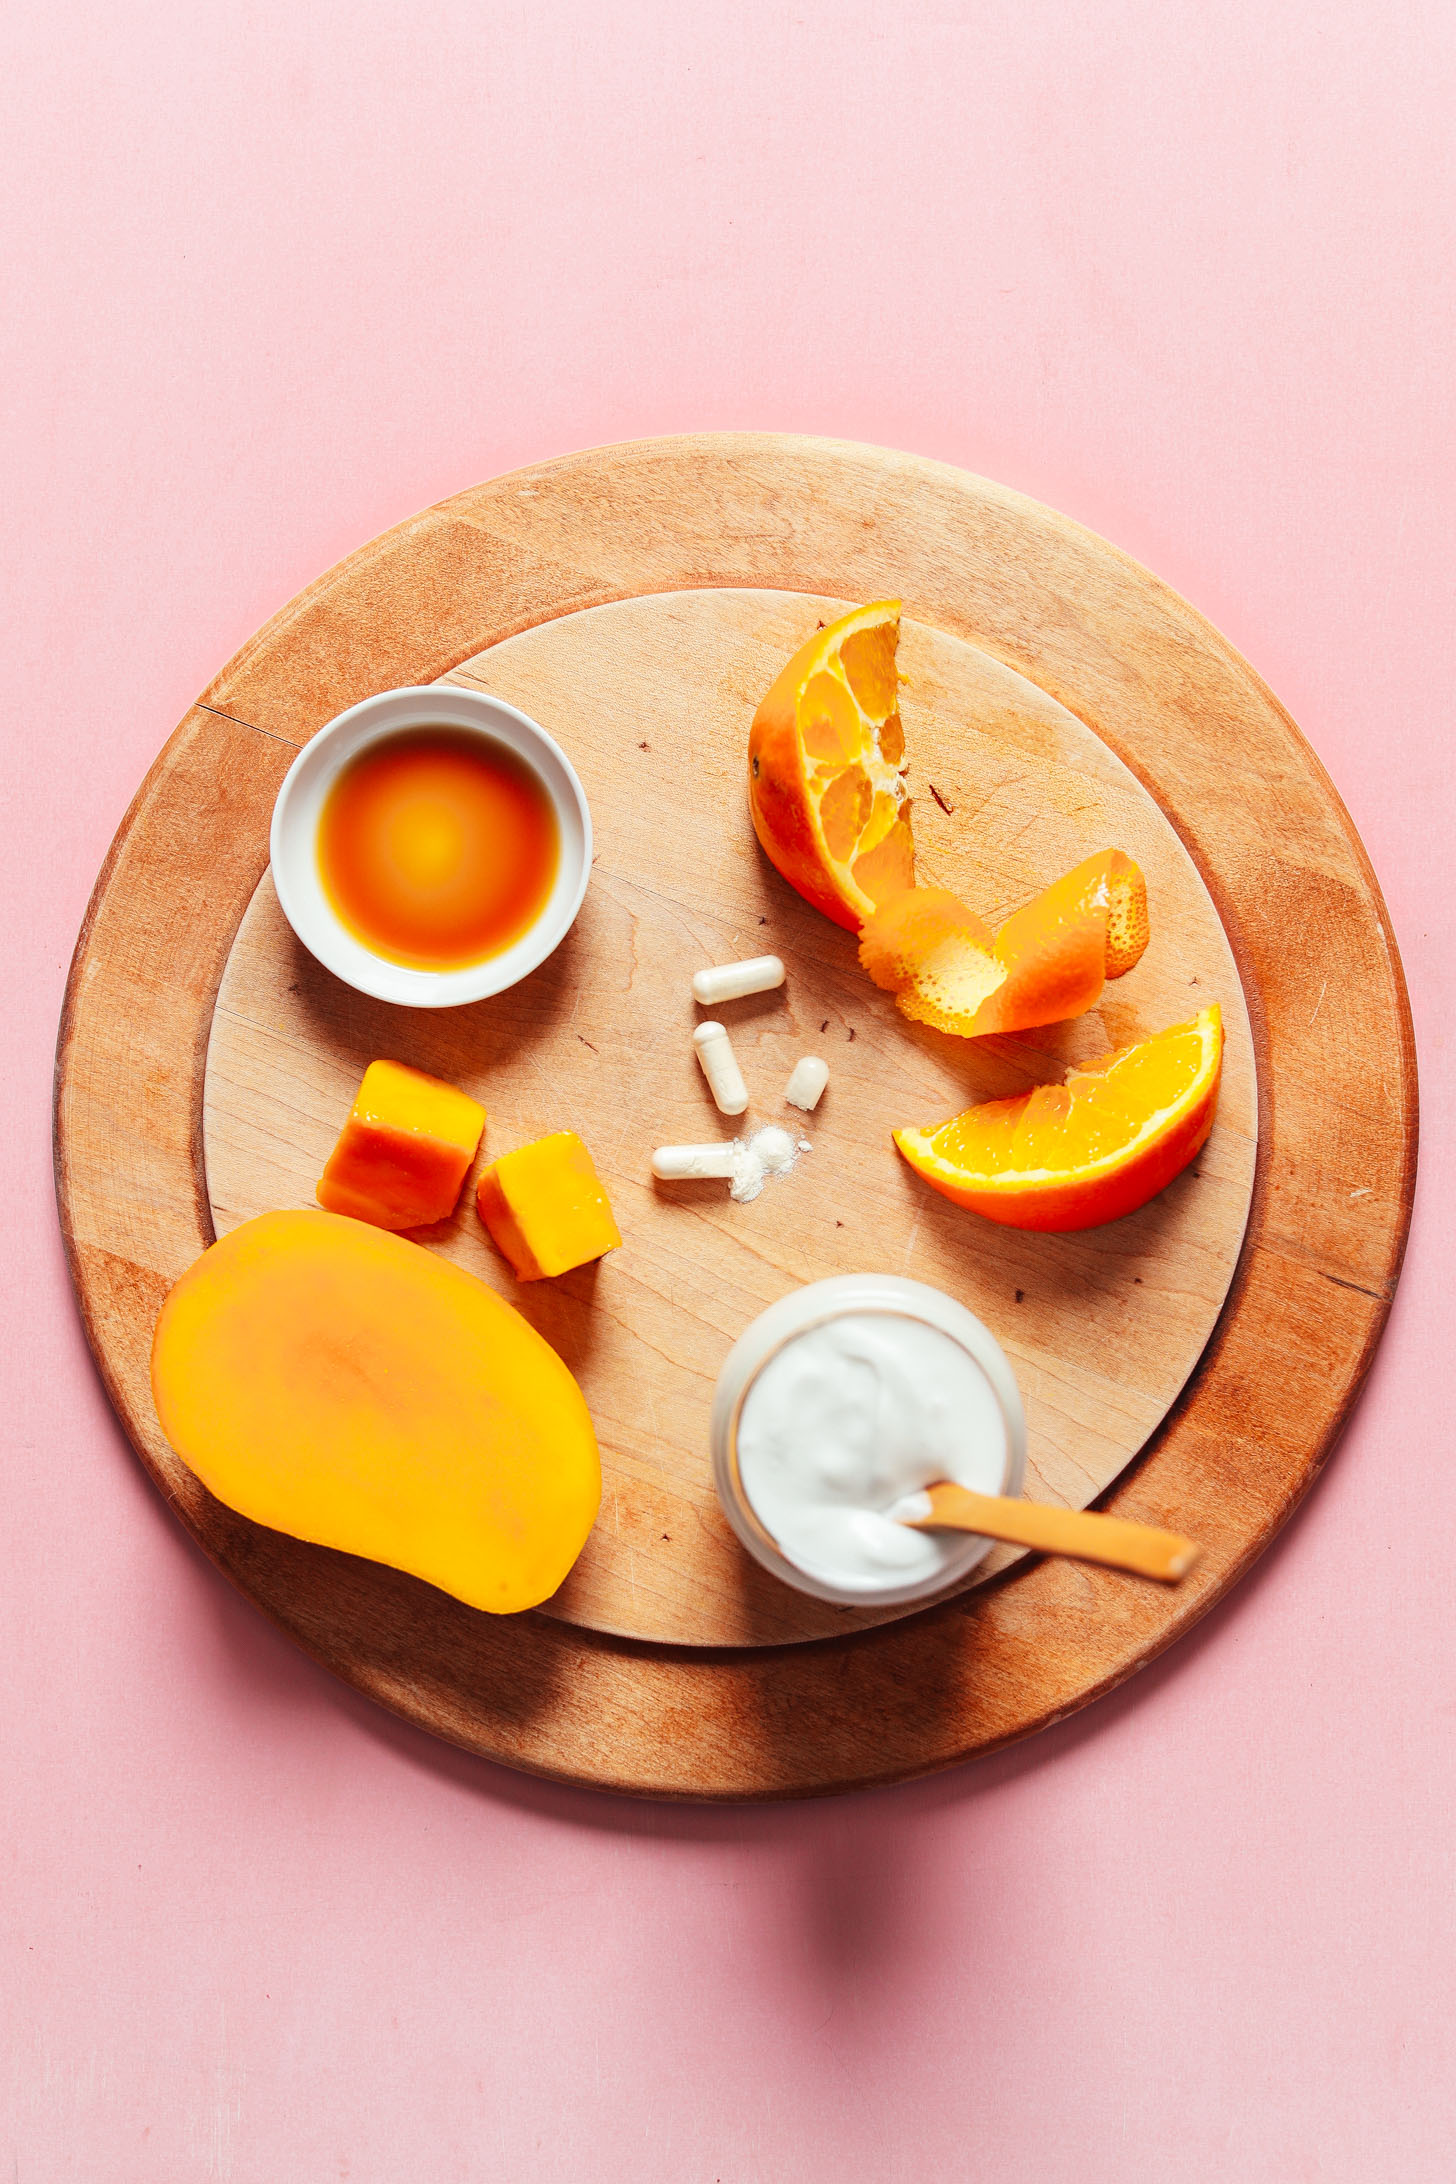 Wood cutting board with mango, coconut milk, orange, probiotics, and maple syrup for making homemade yogurt